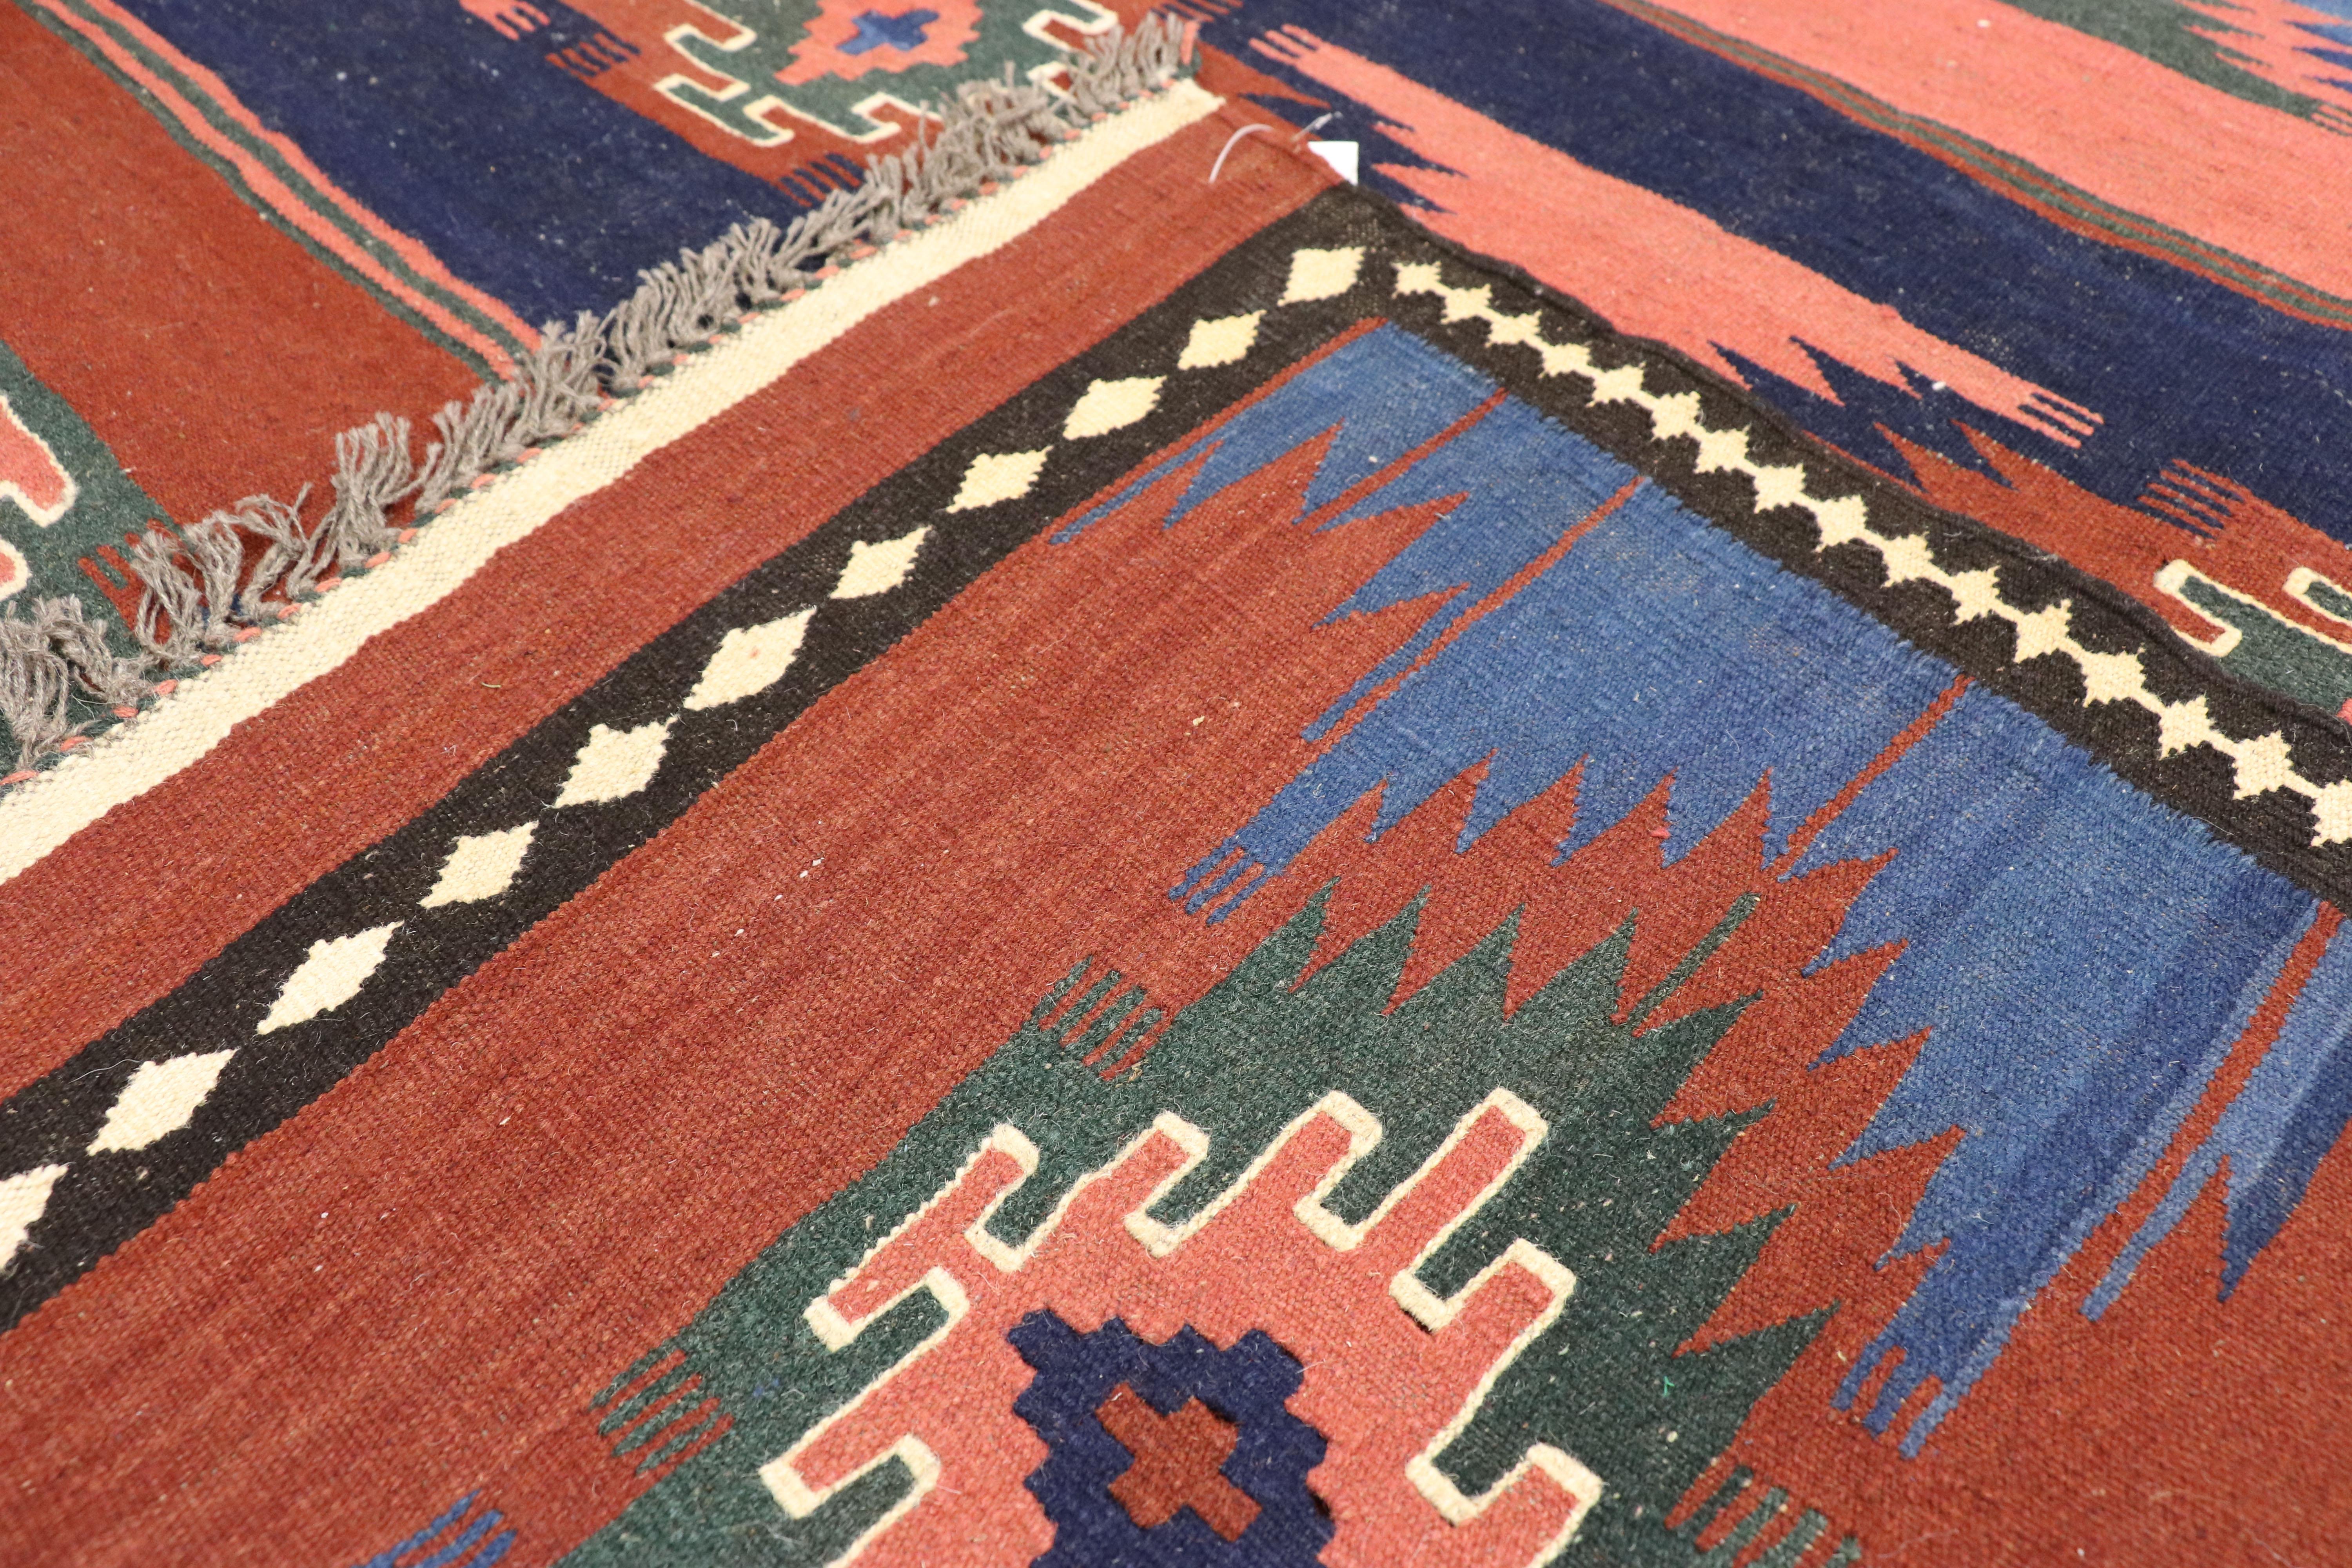 20th Century Vintage Afghani Kilim Rug with Southwestern Navajo Native American Style